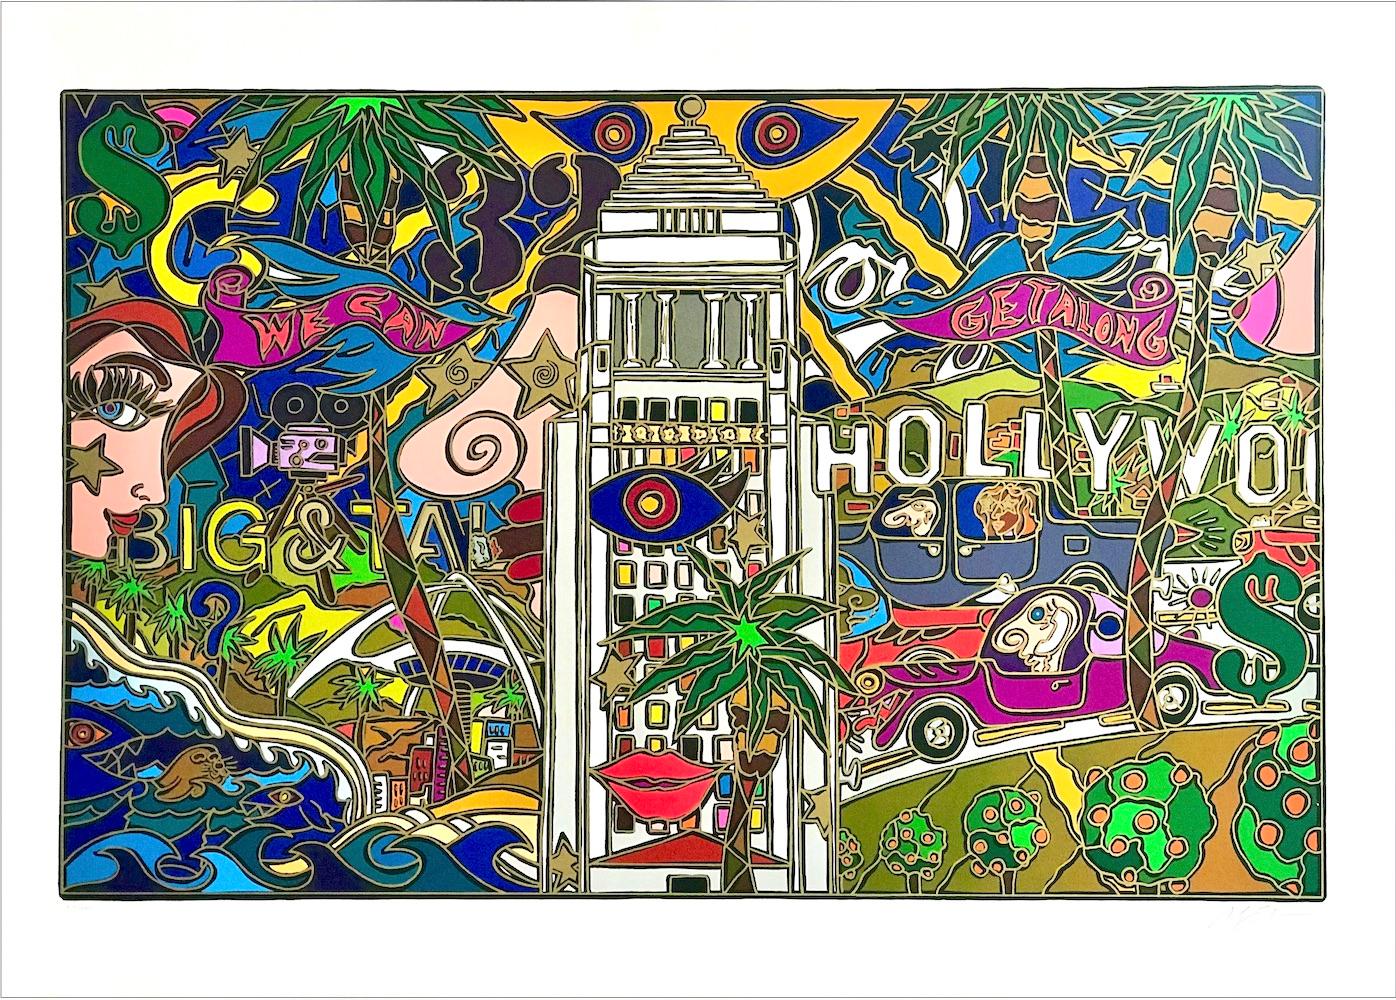 Alex Echo Landscape Print - L.A.! HOLLYWOOD Signed Lithograph, Los Angeles Icons, Pop Art Graffiti Style